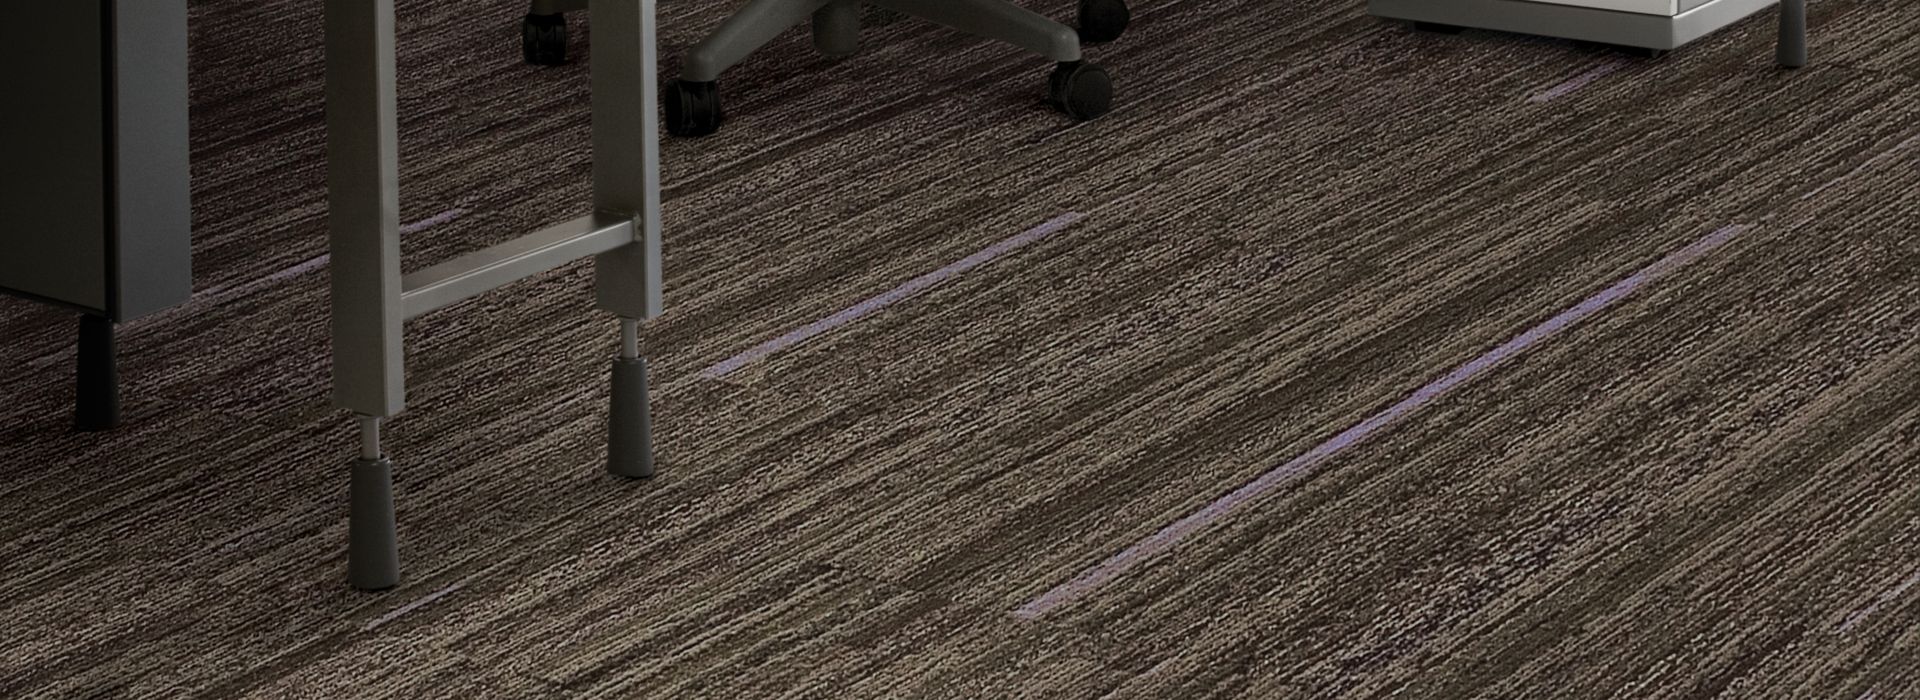 Interface Reincarnation carpet tile in office cubicle area